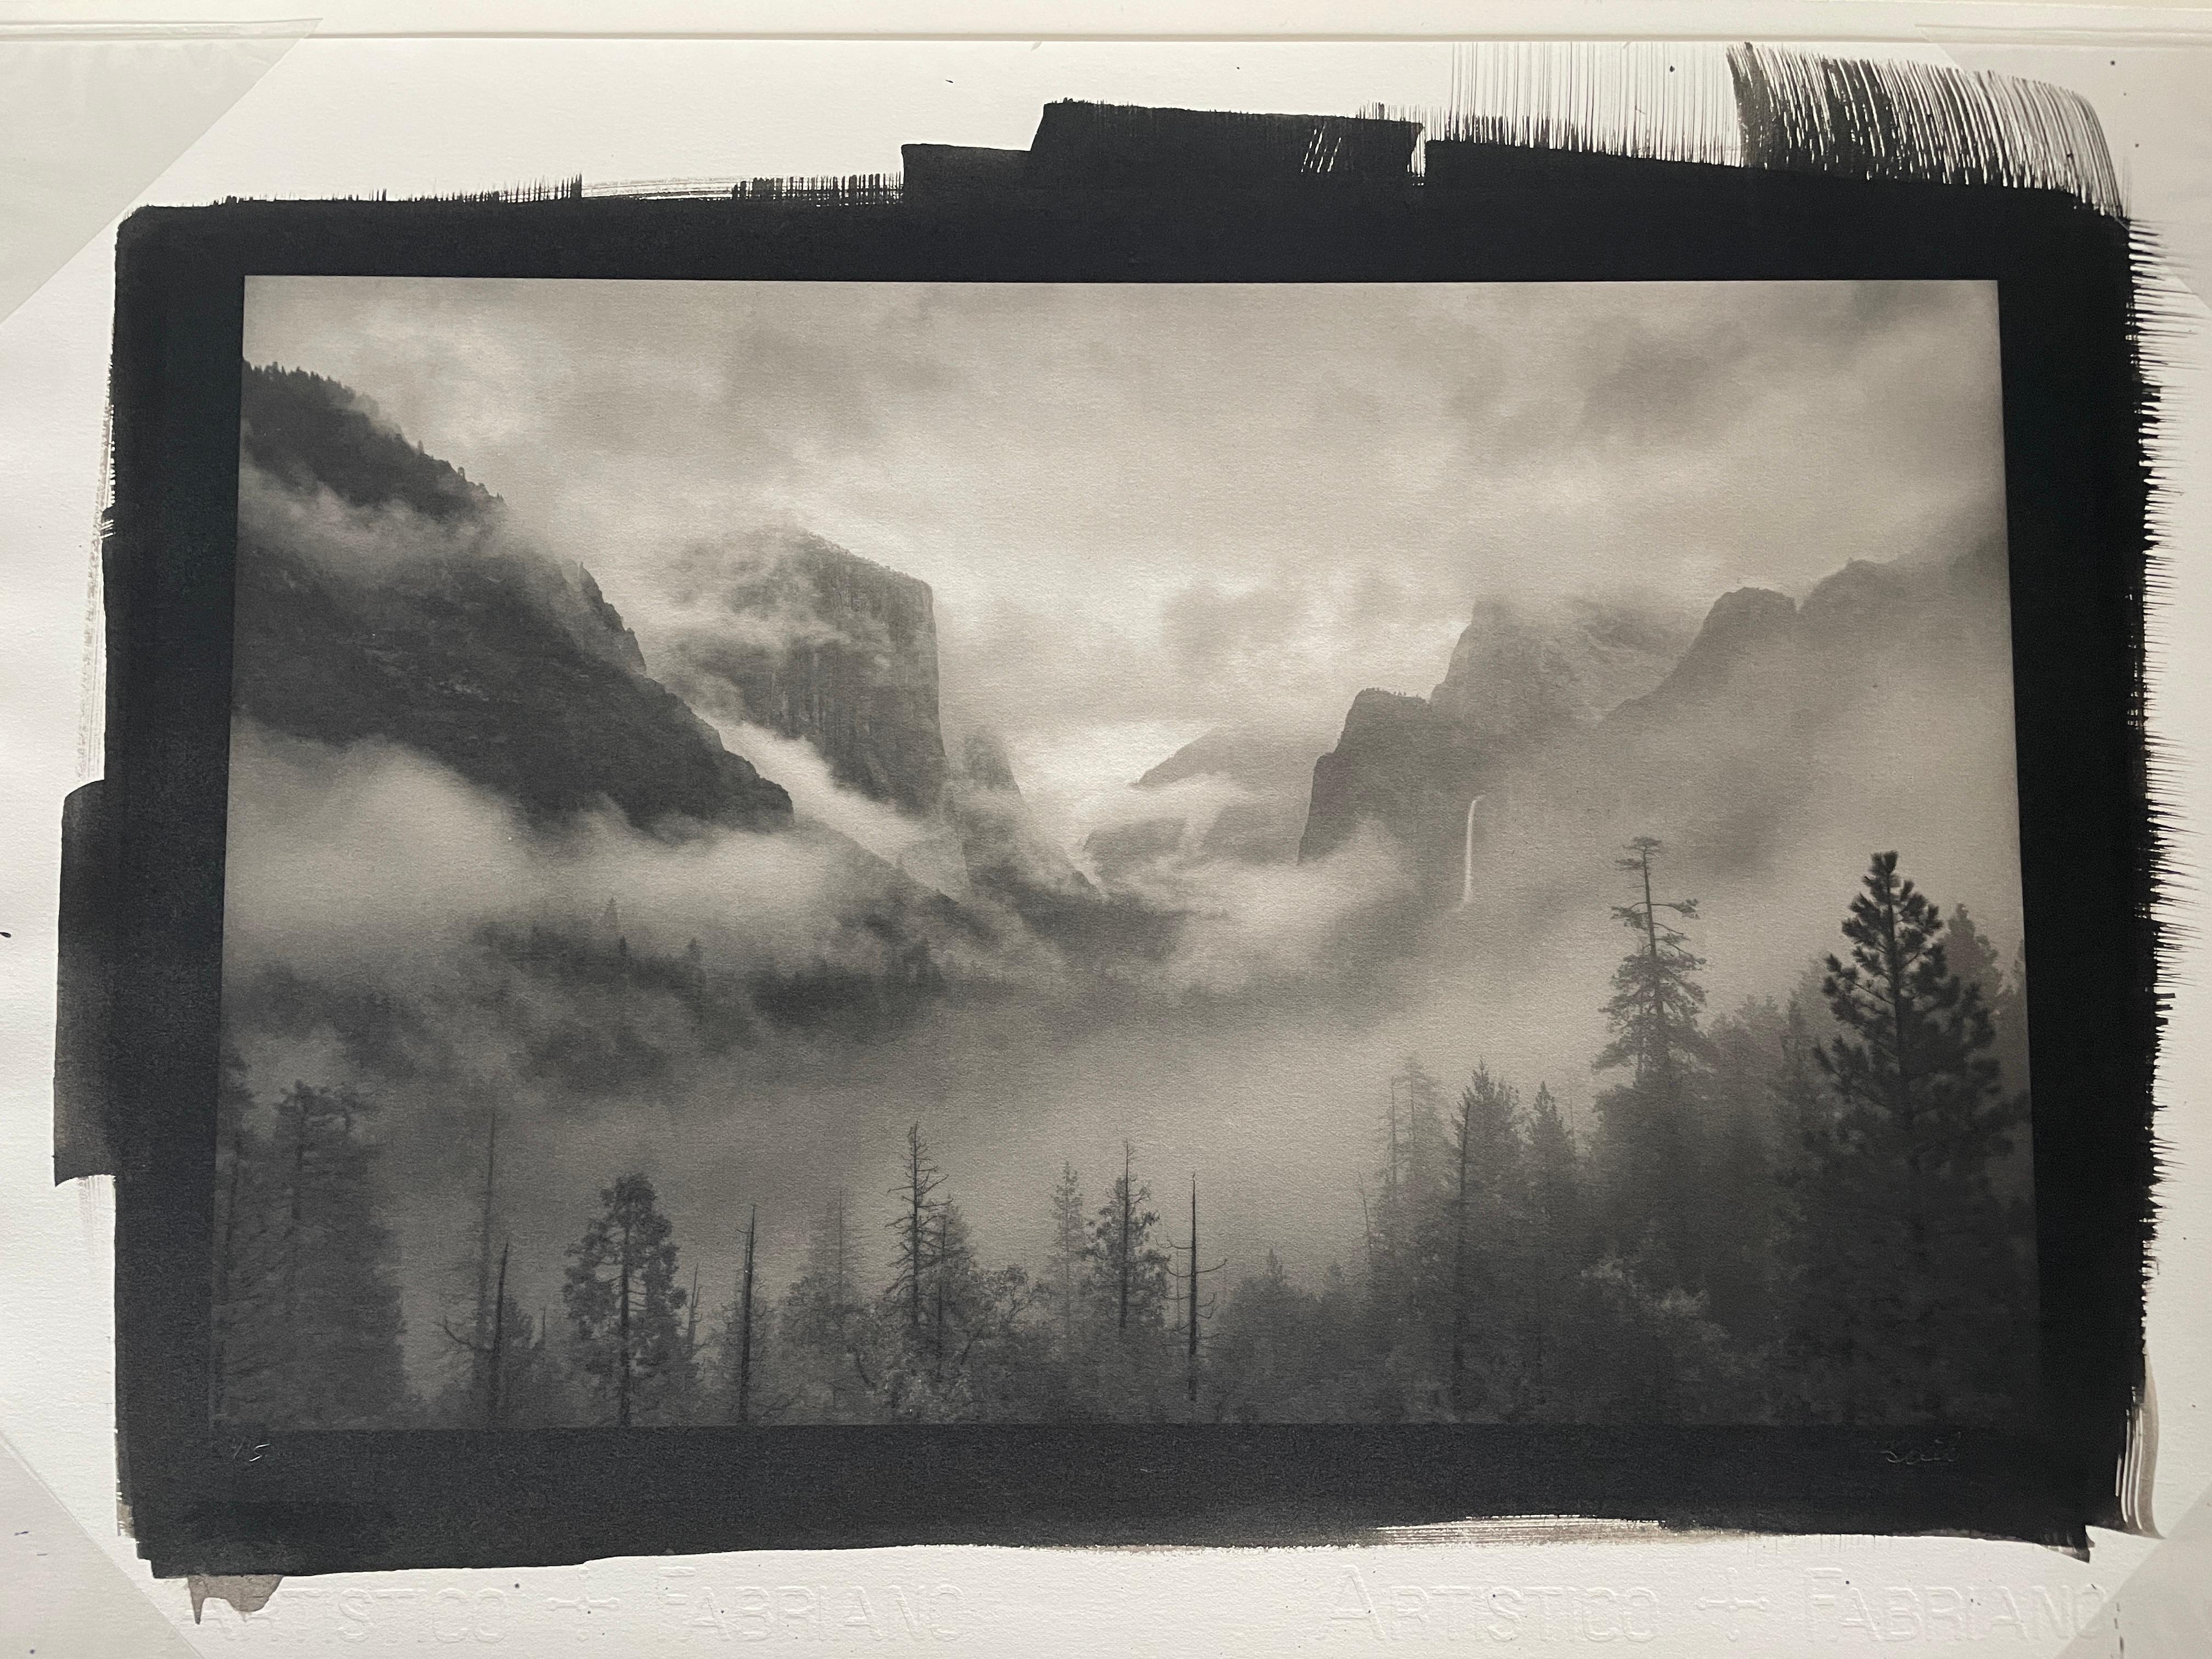 Kerik Kouklis Landscape Photograph – Tunnelansicht des Yosemite National Parks, Kalifornien